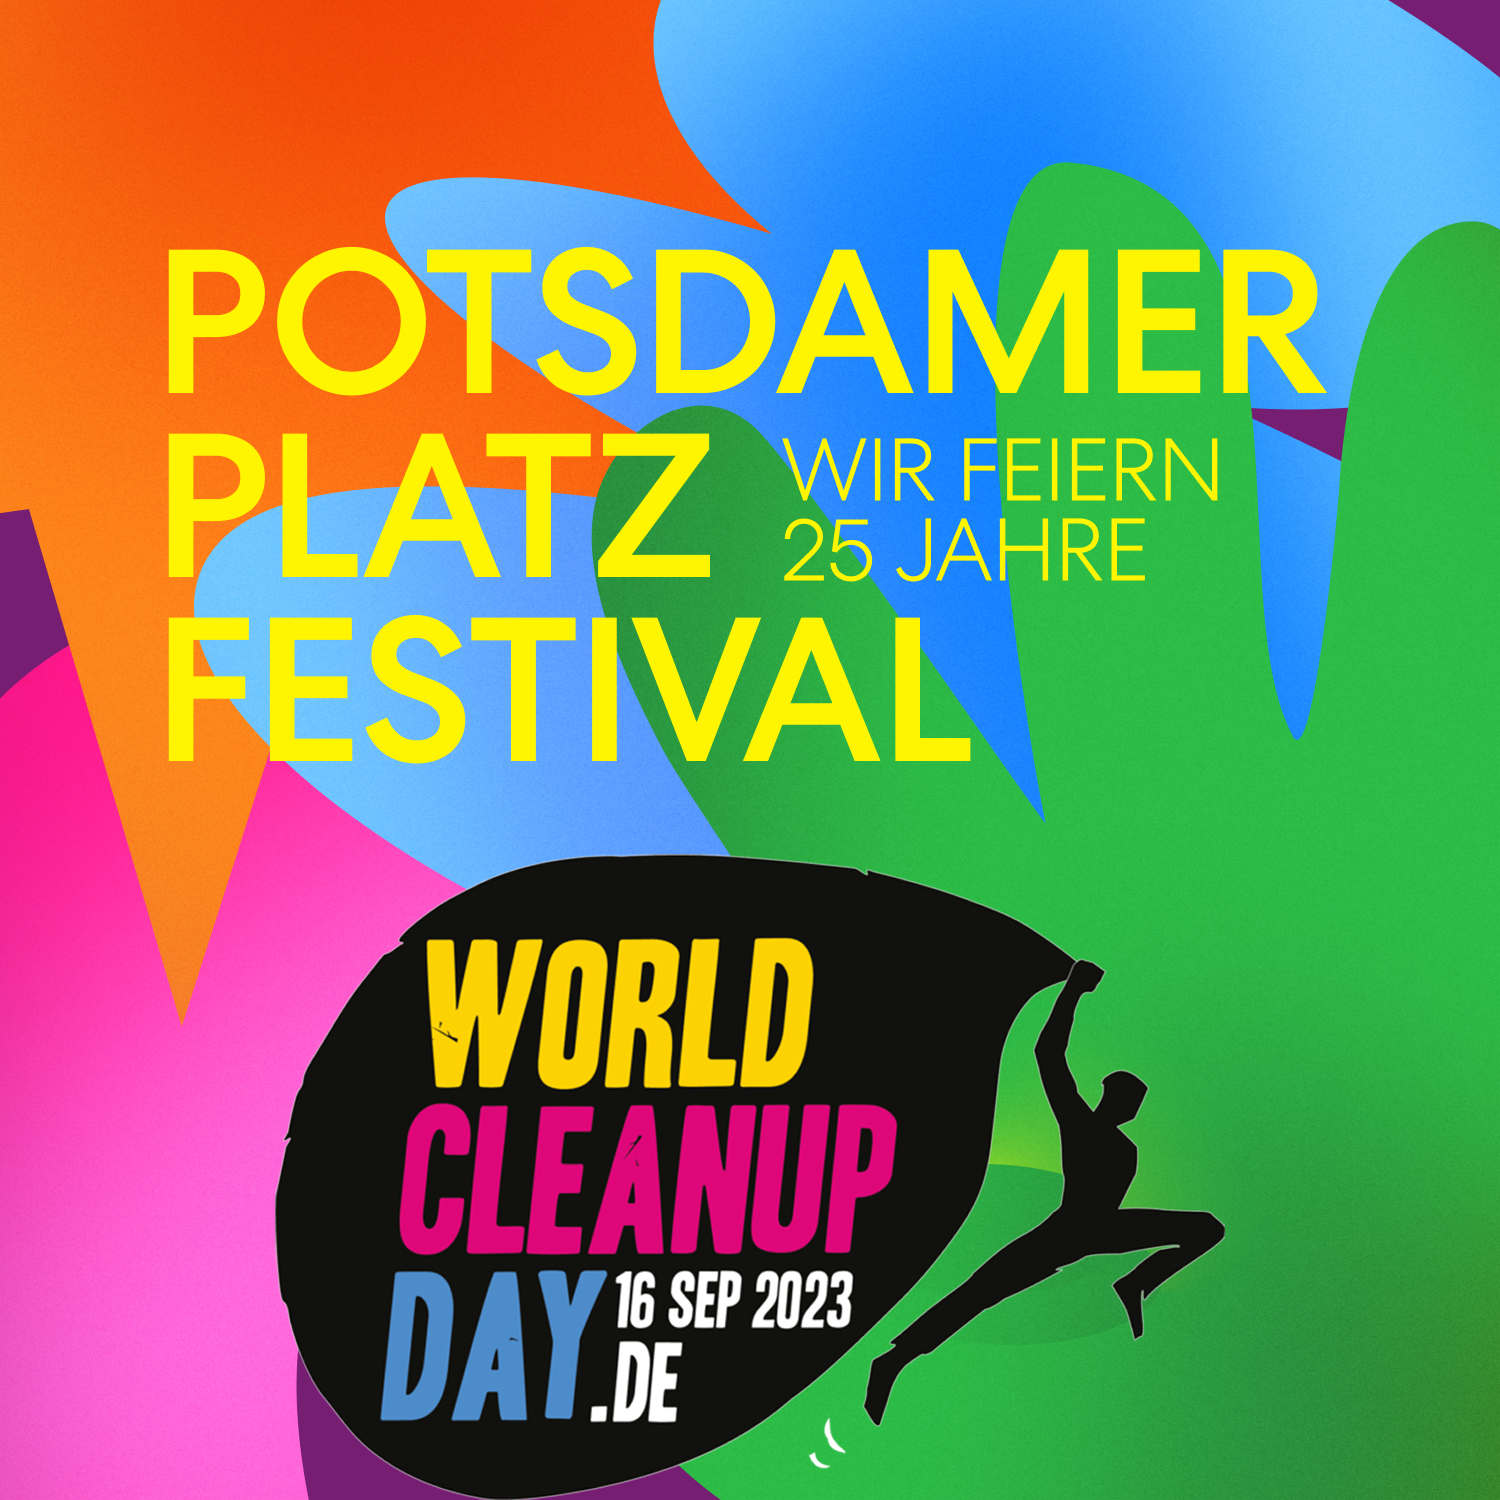 Potsdamer Platz Festival Clean Up (Berlin)